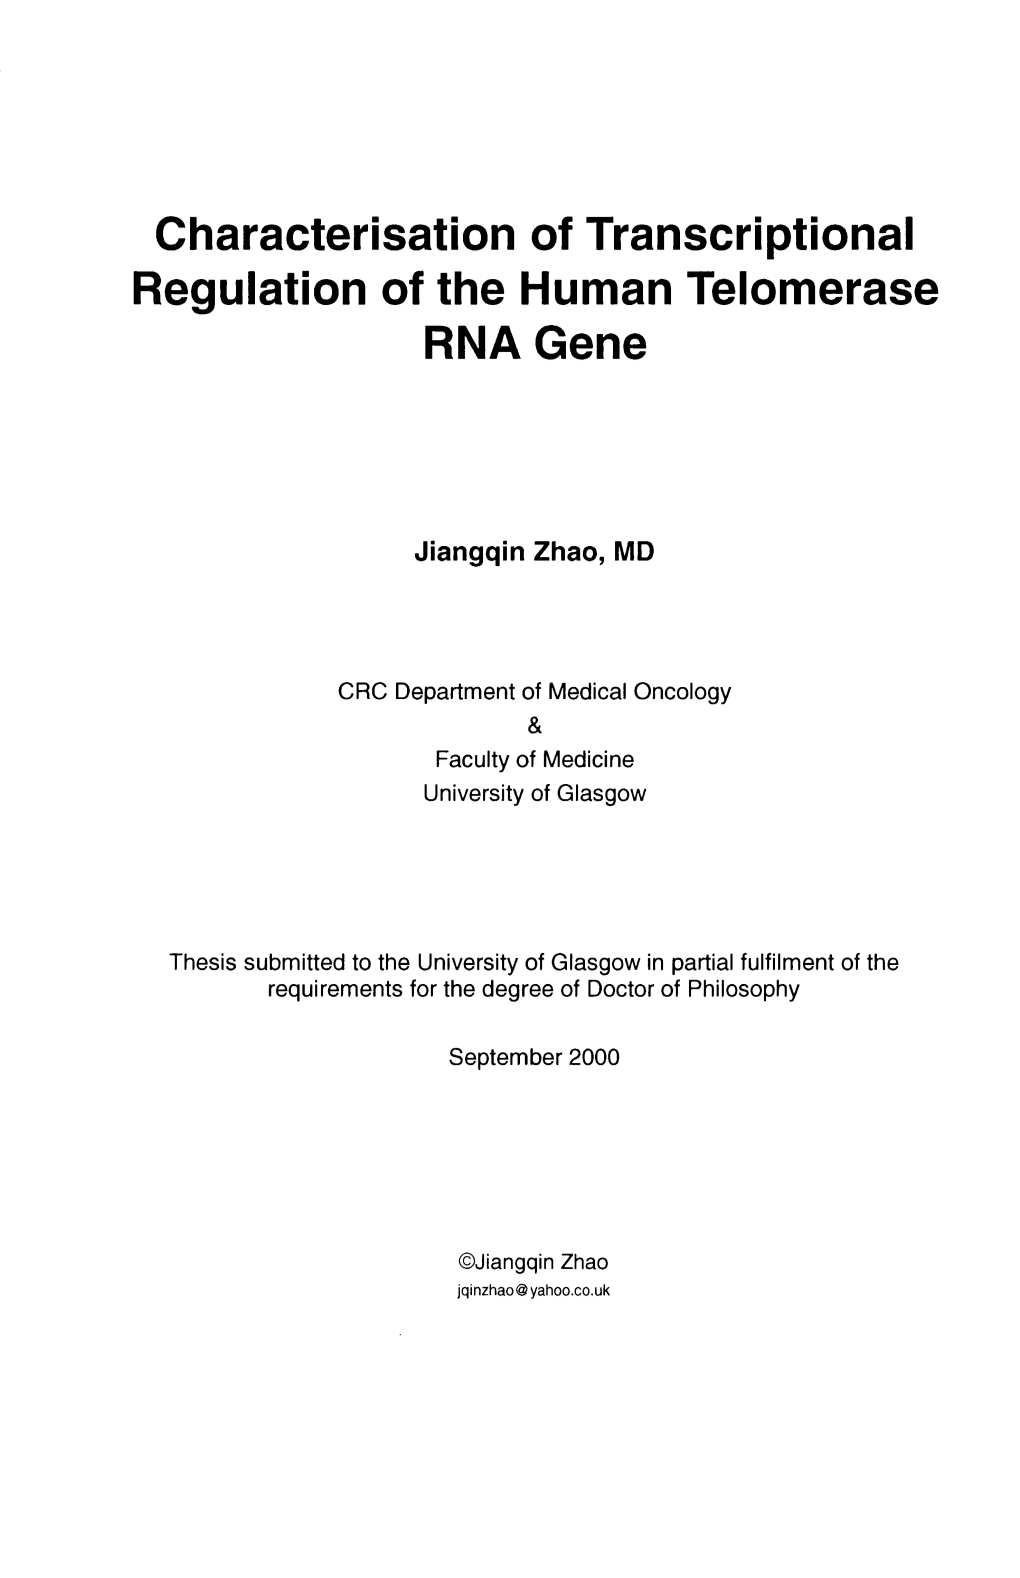 Characterisation of Transcriptional Regulation of the Human Telomerase RNA Gene